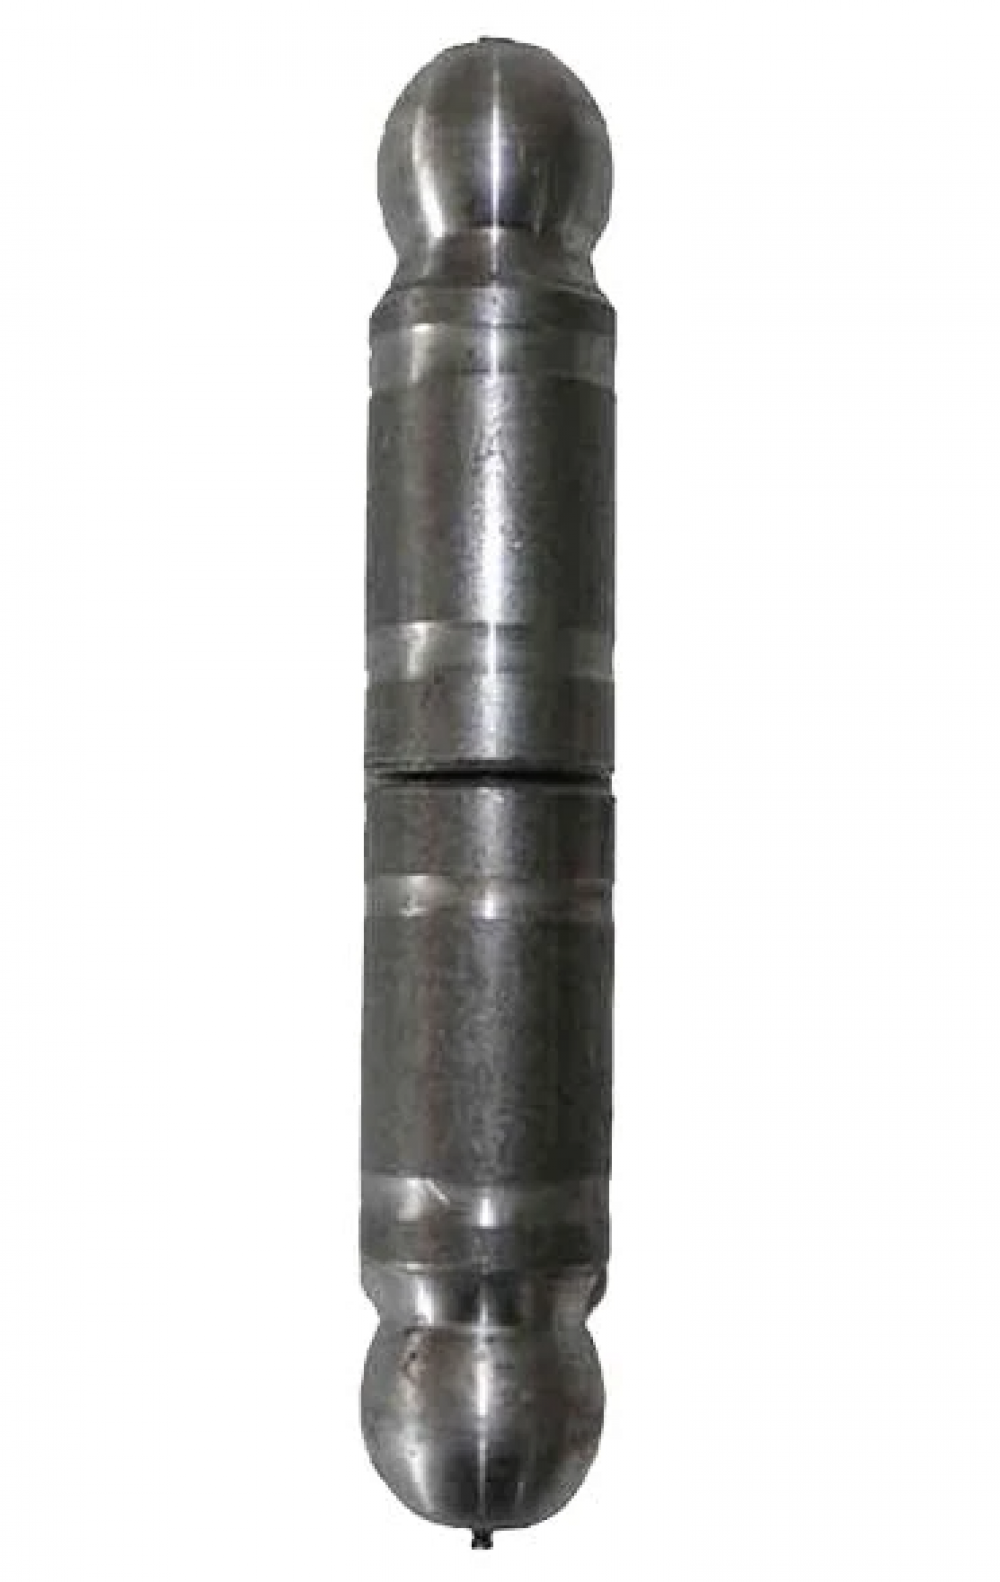 Balama sudabila  AztecFer cu model  16 mm x 140 mm 2 buc / set